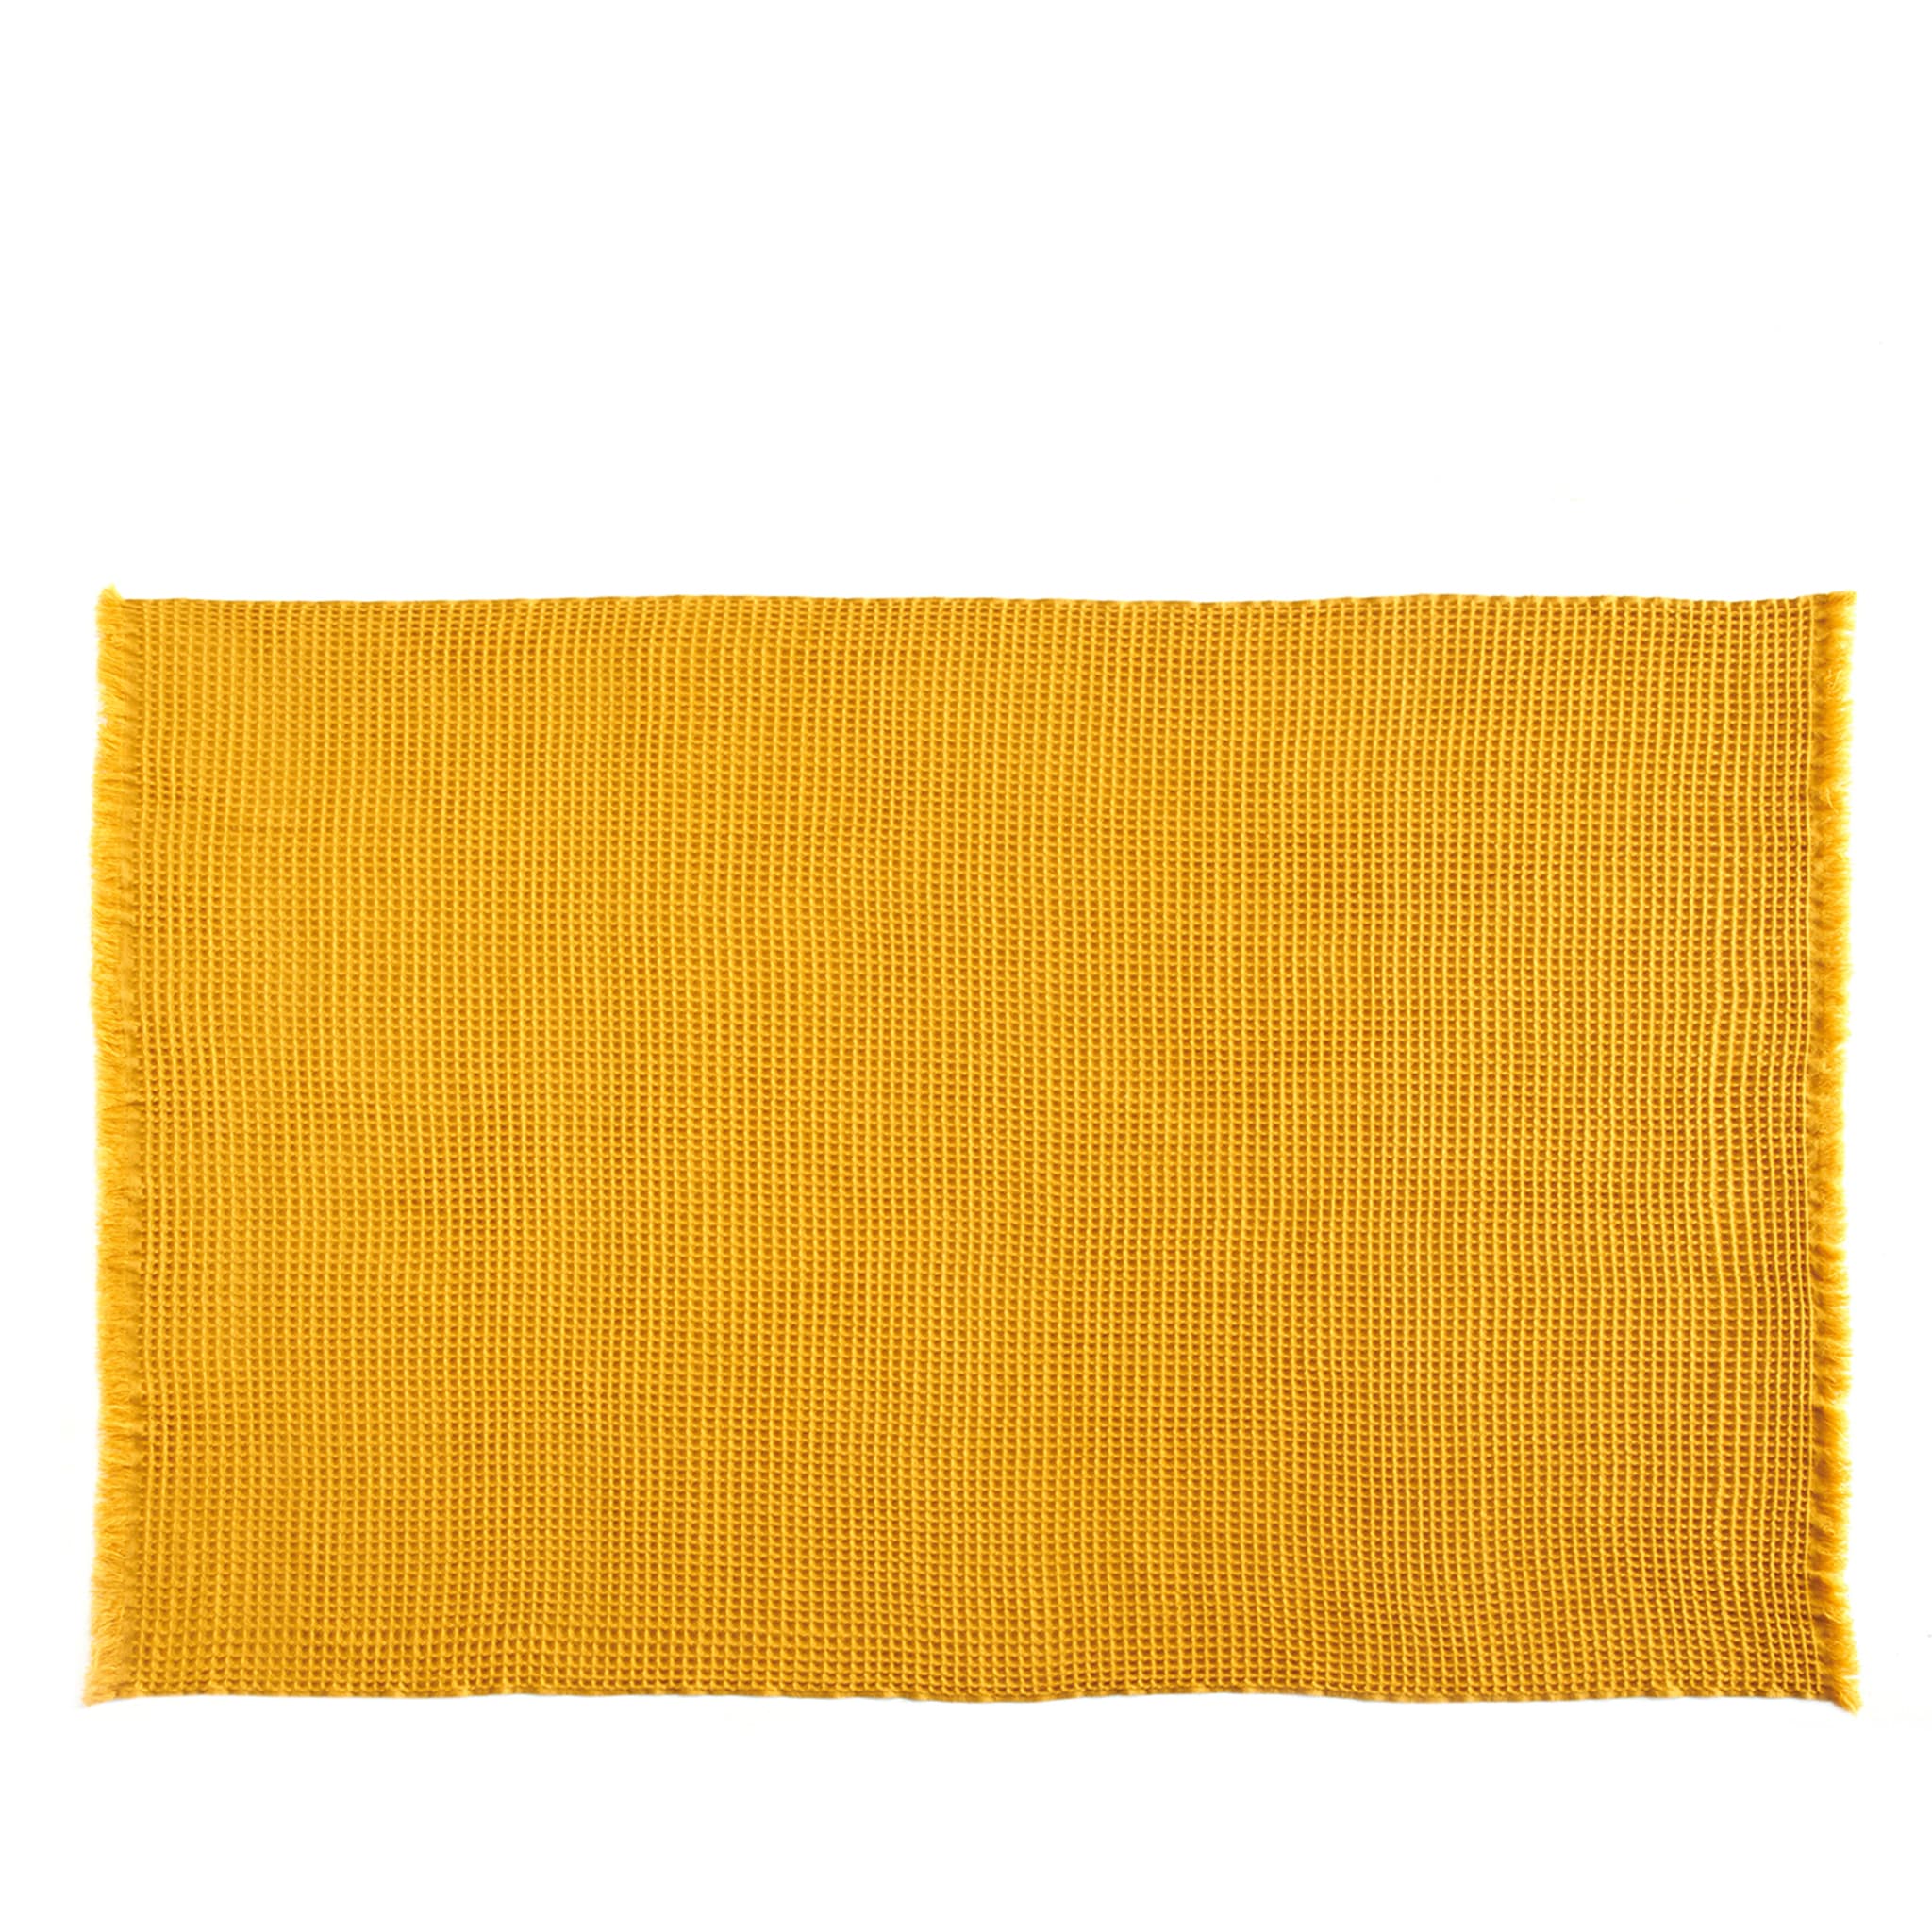 Terramadre Nido d'Ape Mustard Cashmere Blanket - Alternative view 2